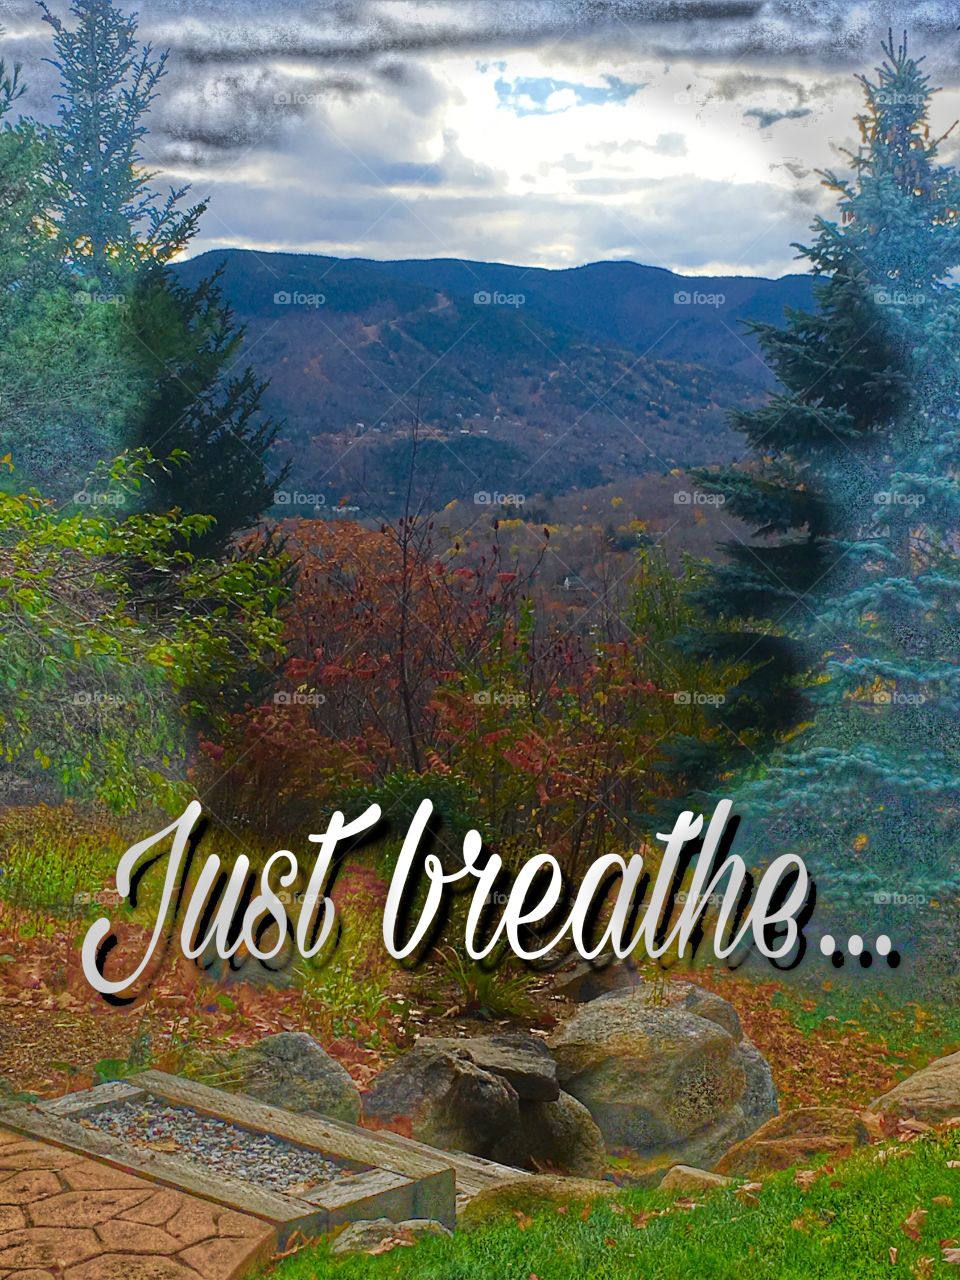 Just breathe 